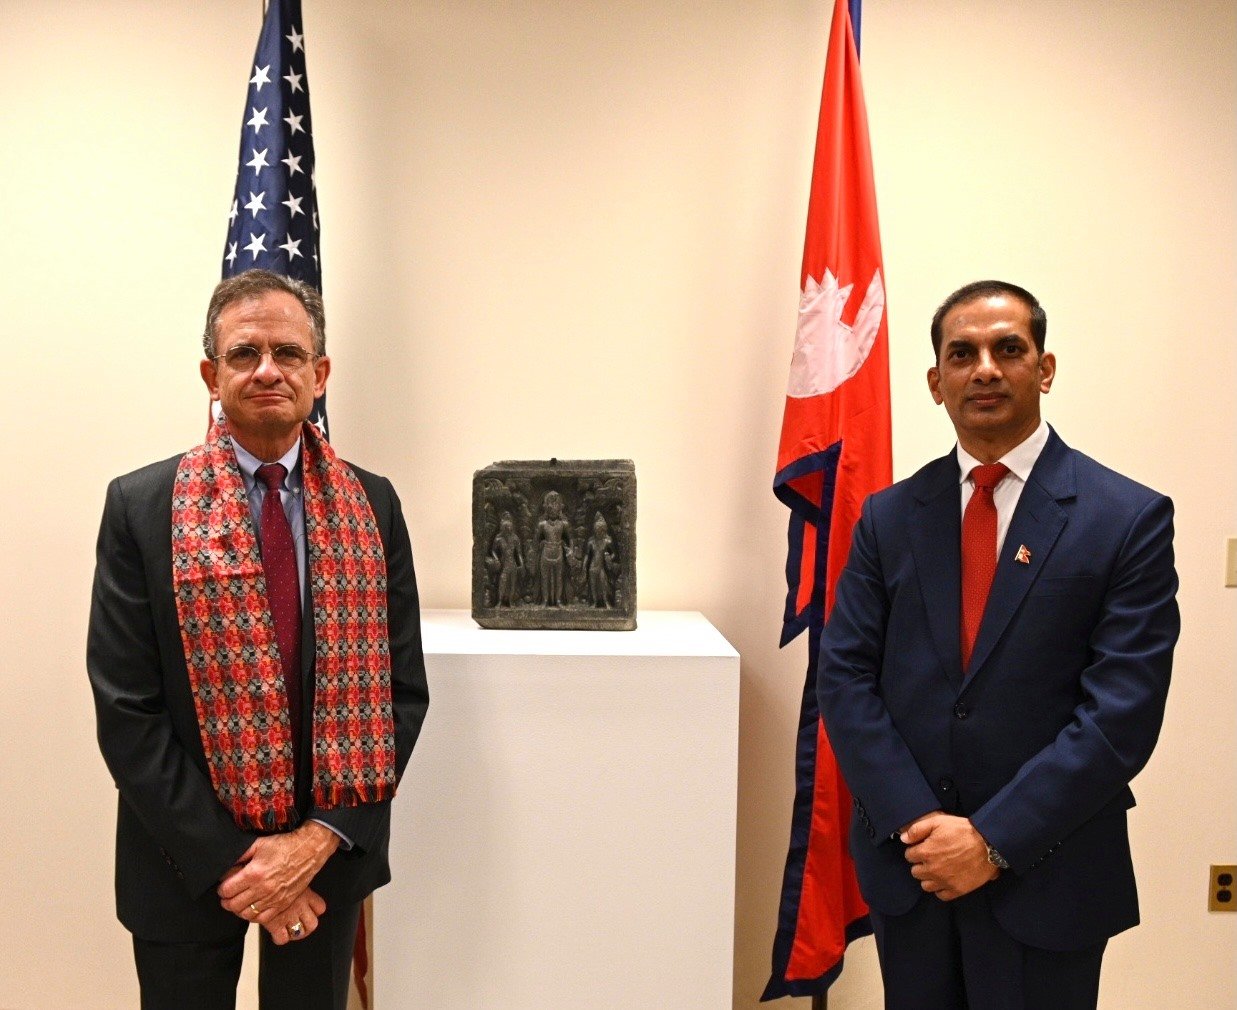 Metropolitan Museum of Art to return stone sculpture to Nepal